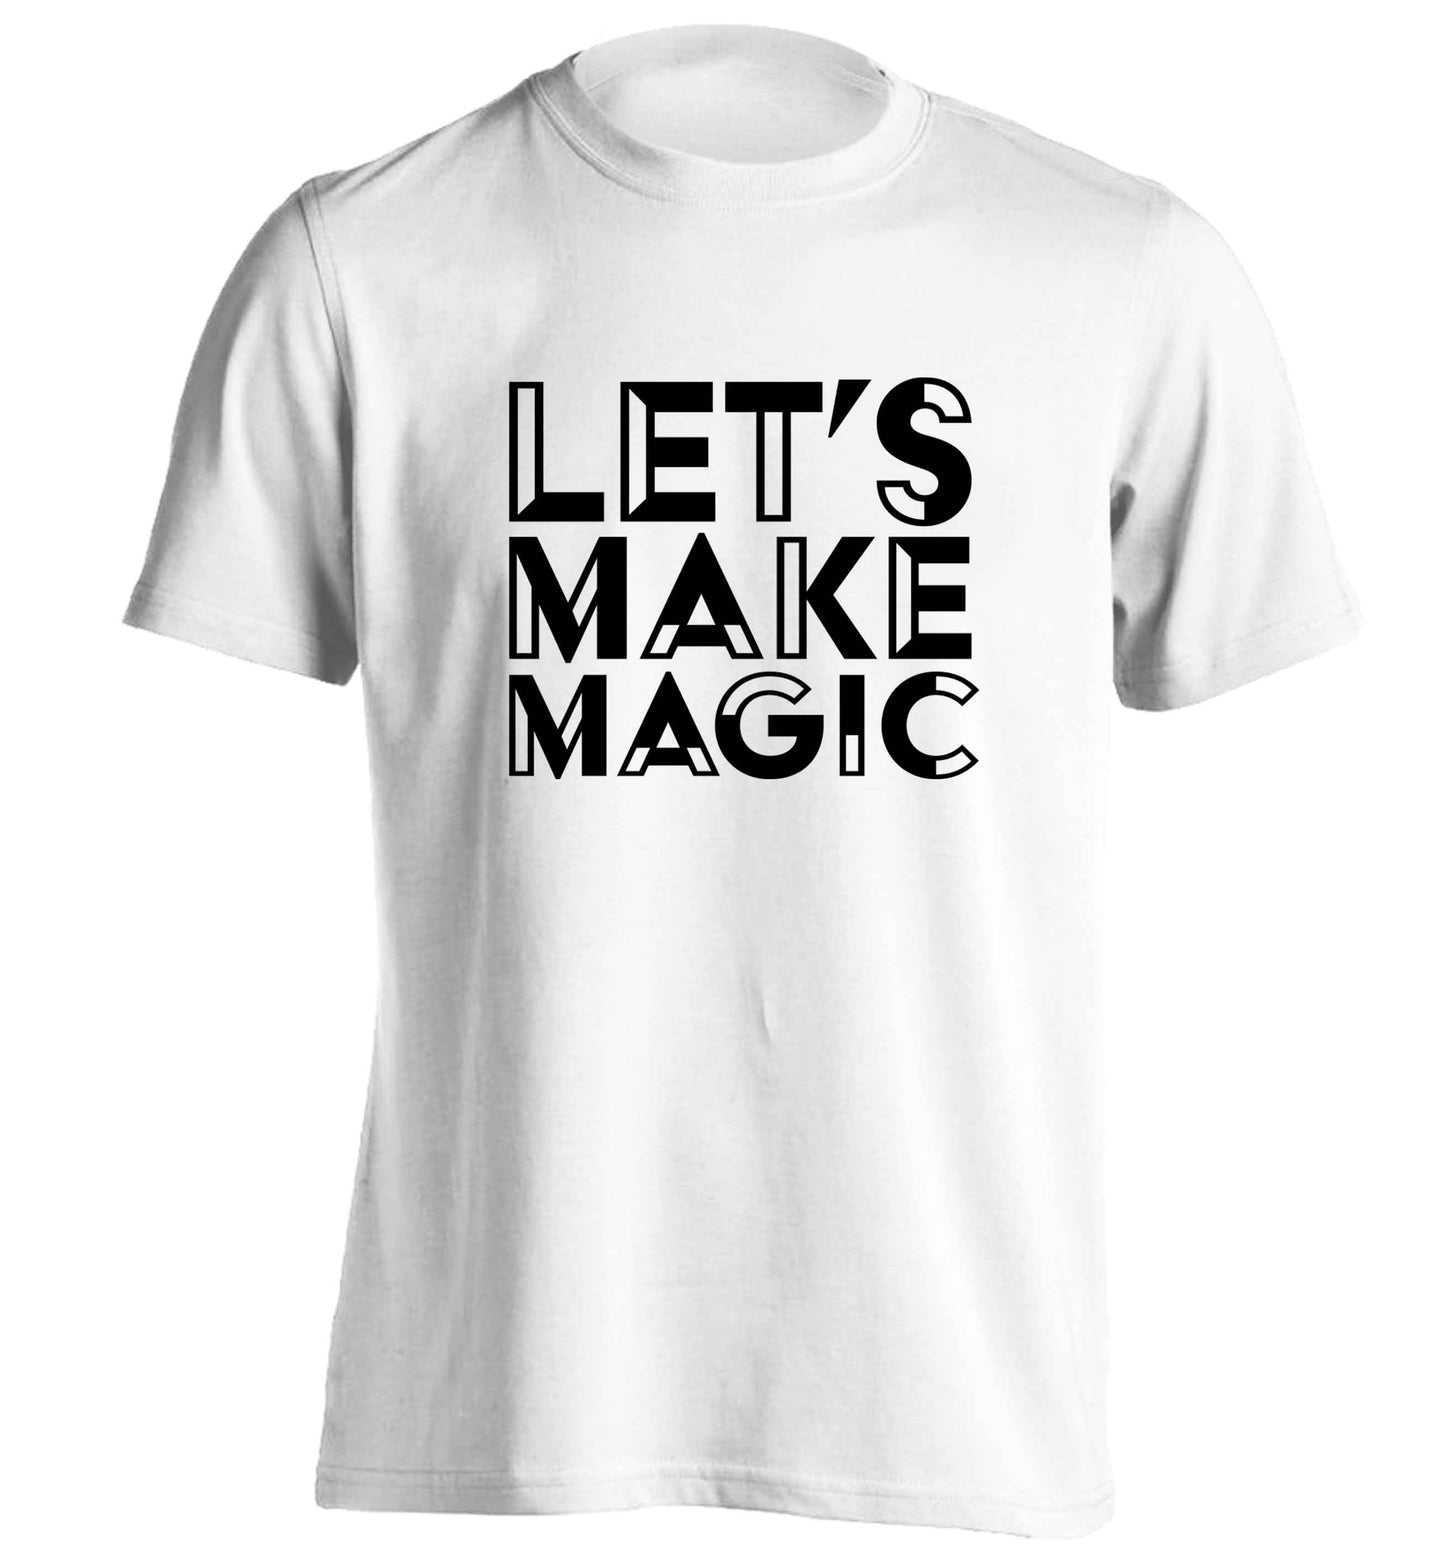 Let's make magic adults unisex white Tshirt 2XL